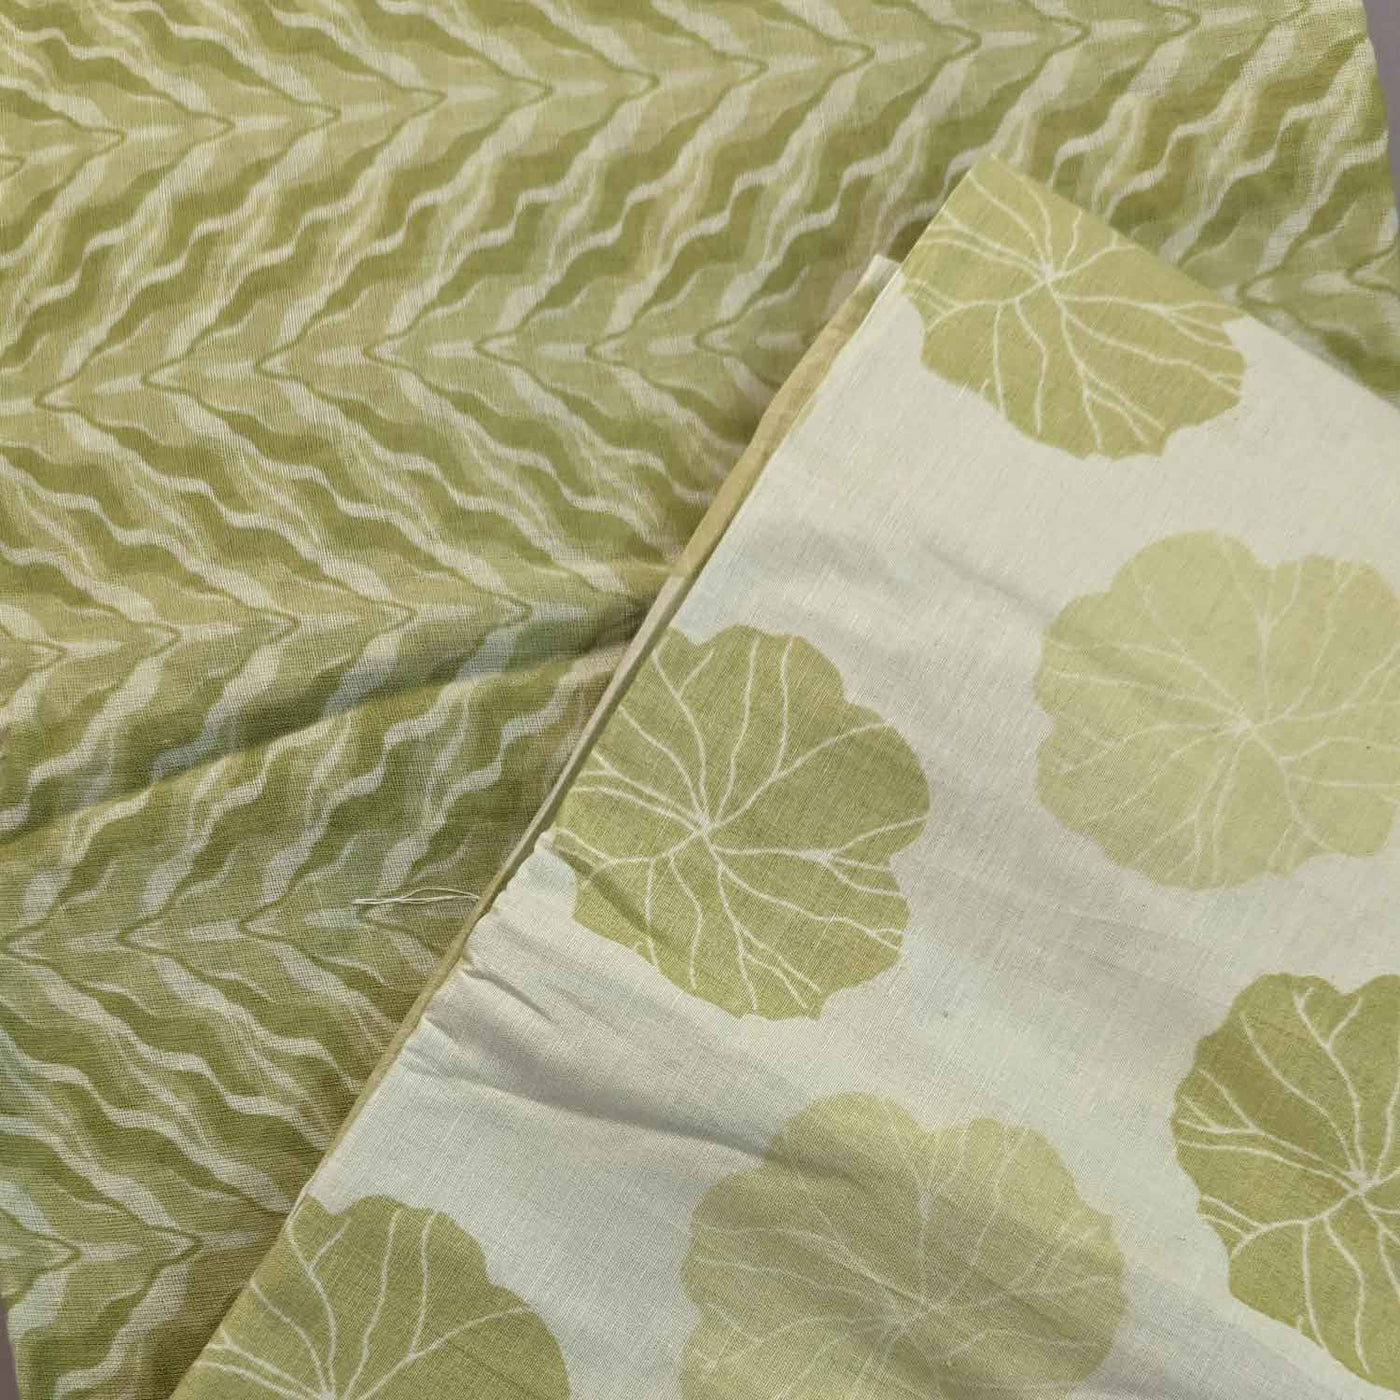 Cream & Mehndi Green Floral / Chevron Cotton Fabric Combo